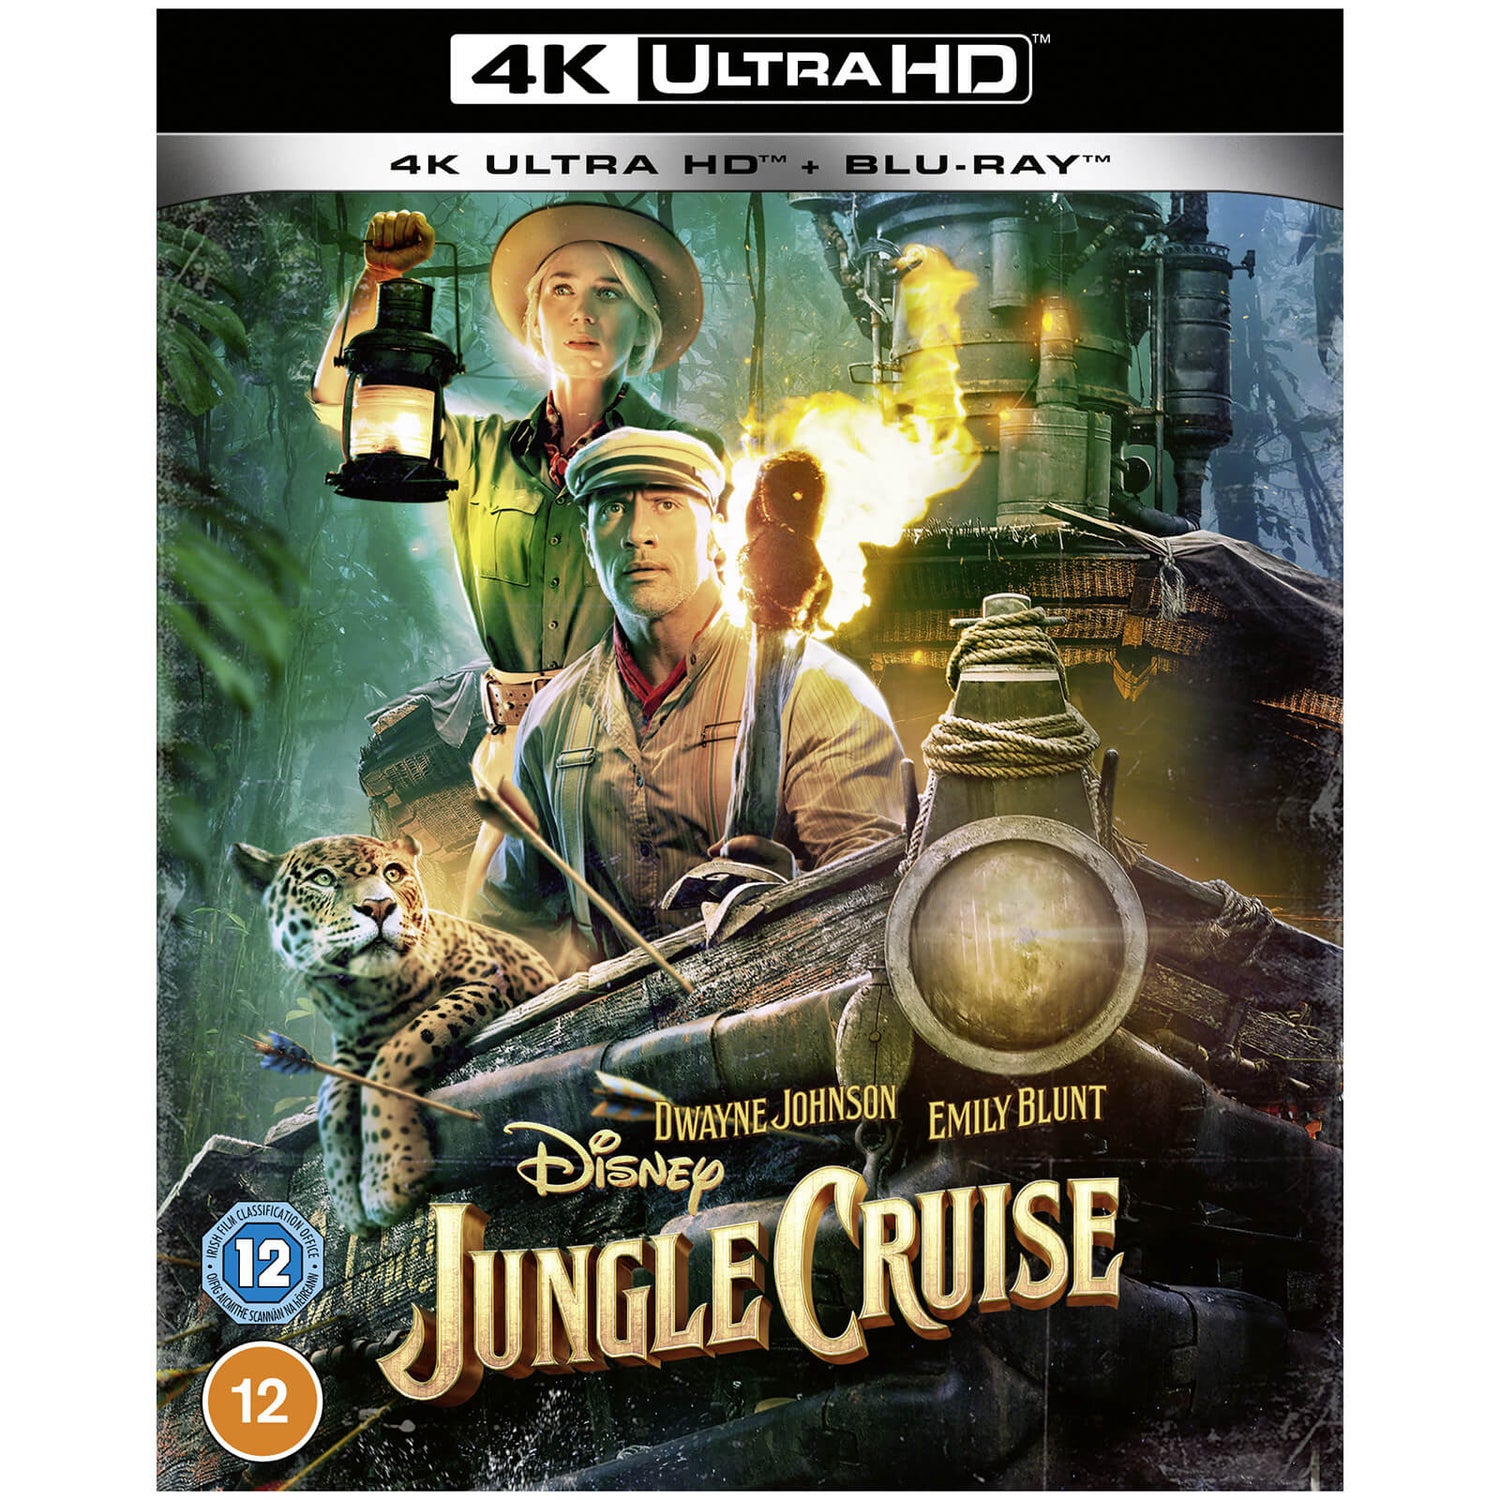 Jungle Cruise - 4K Ultra HD (Includes Blu-ray)